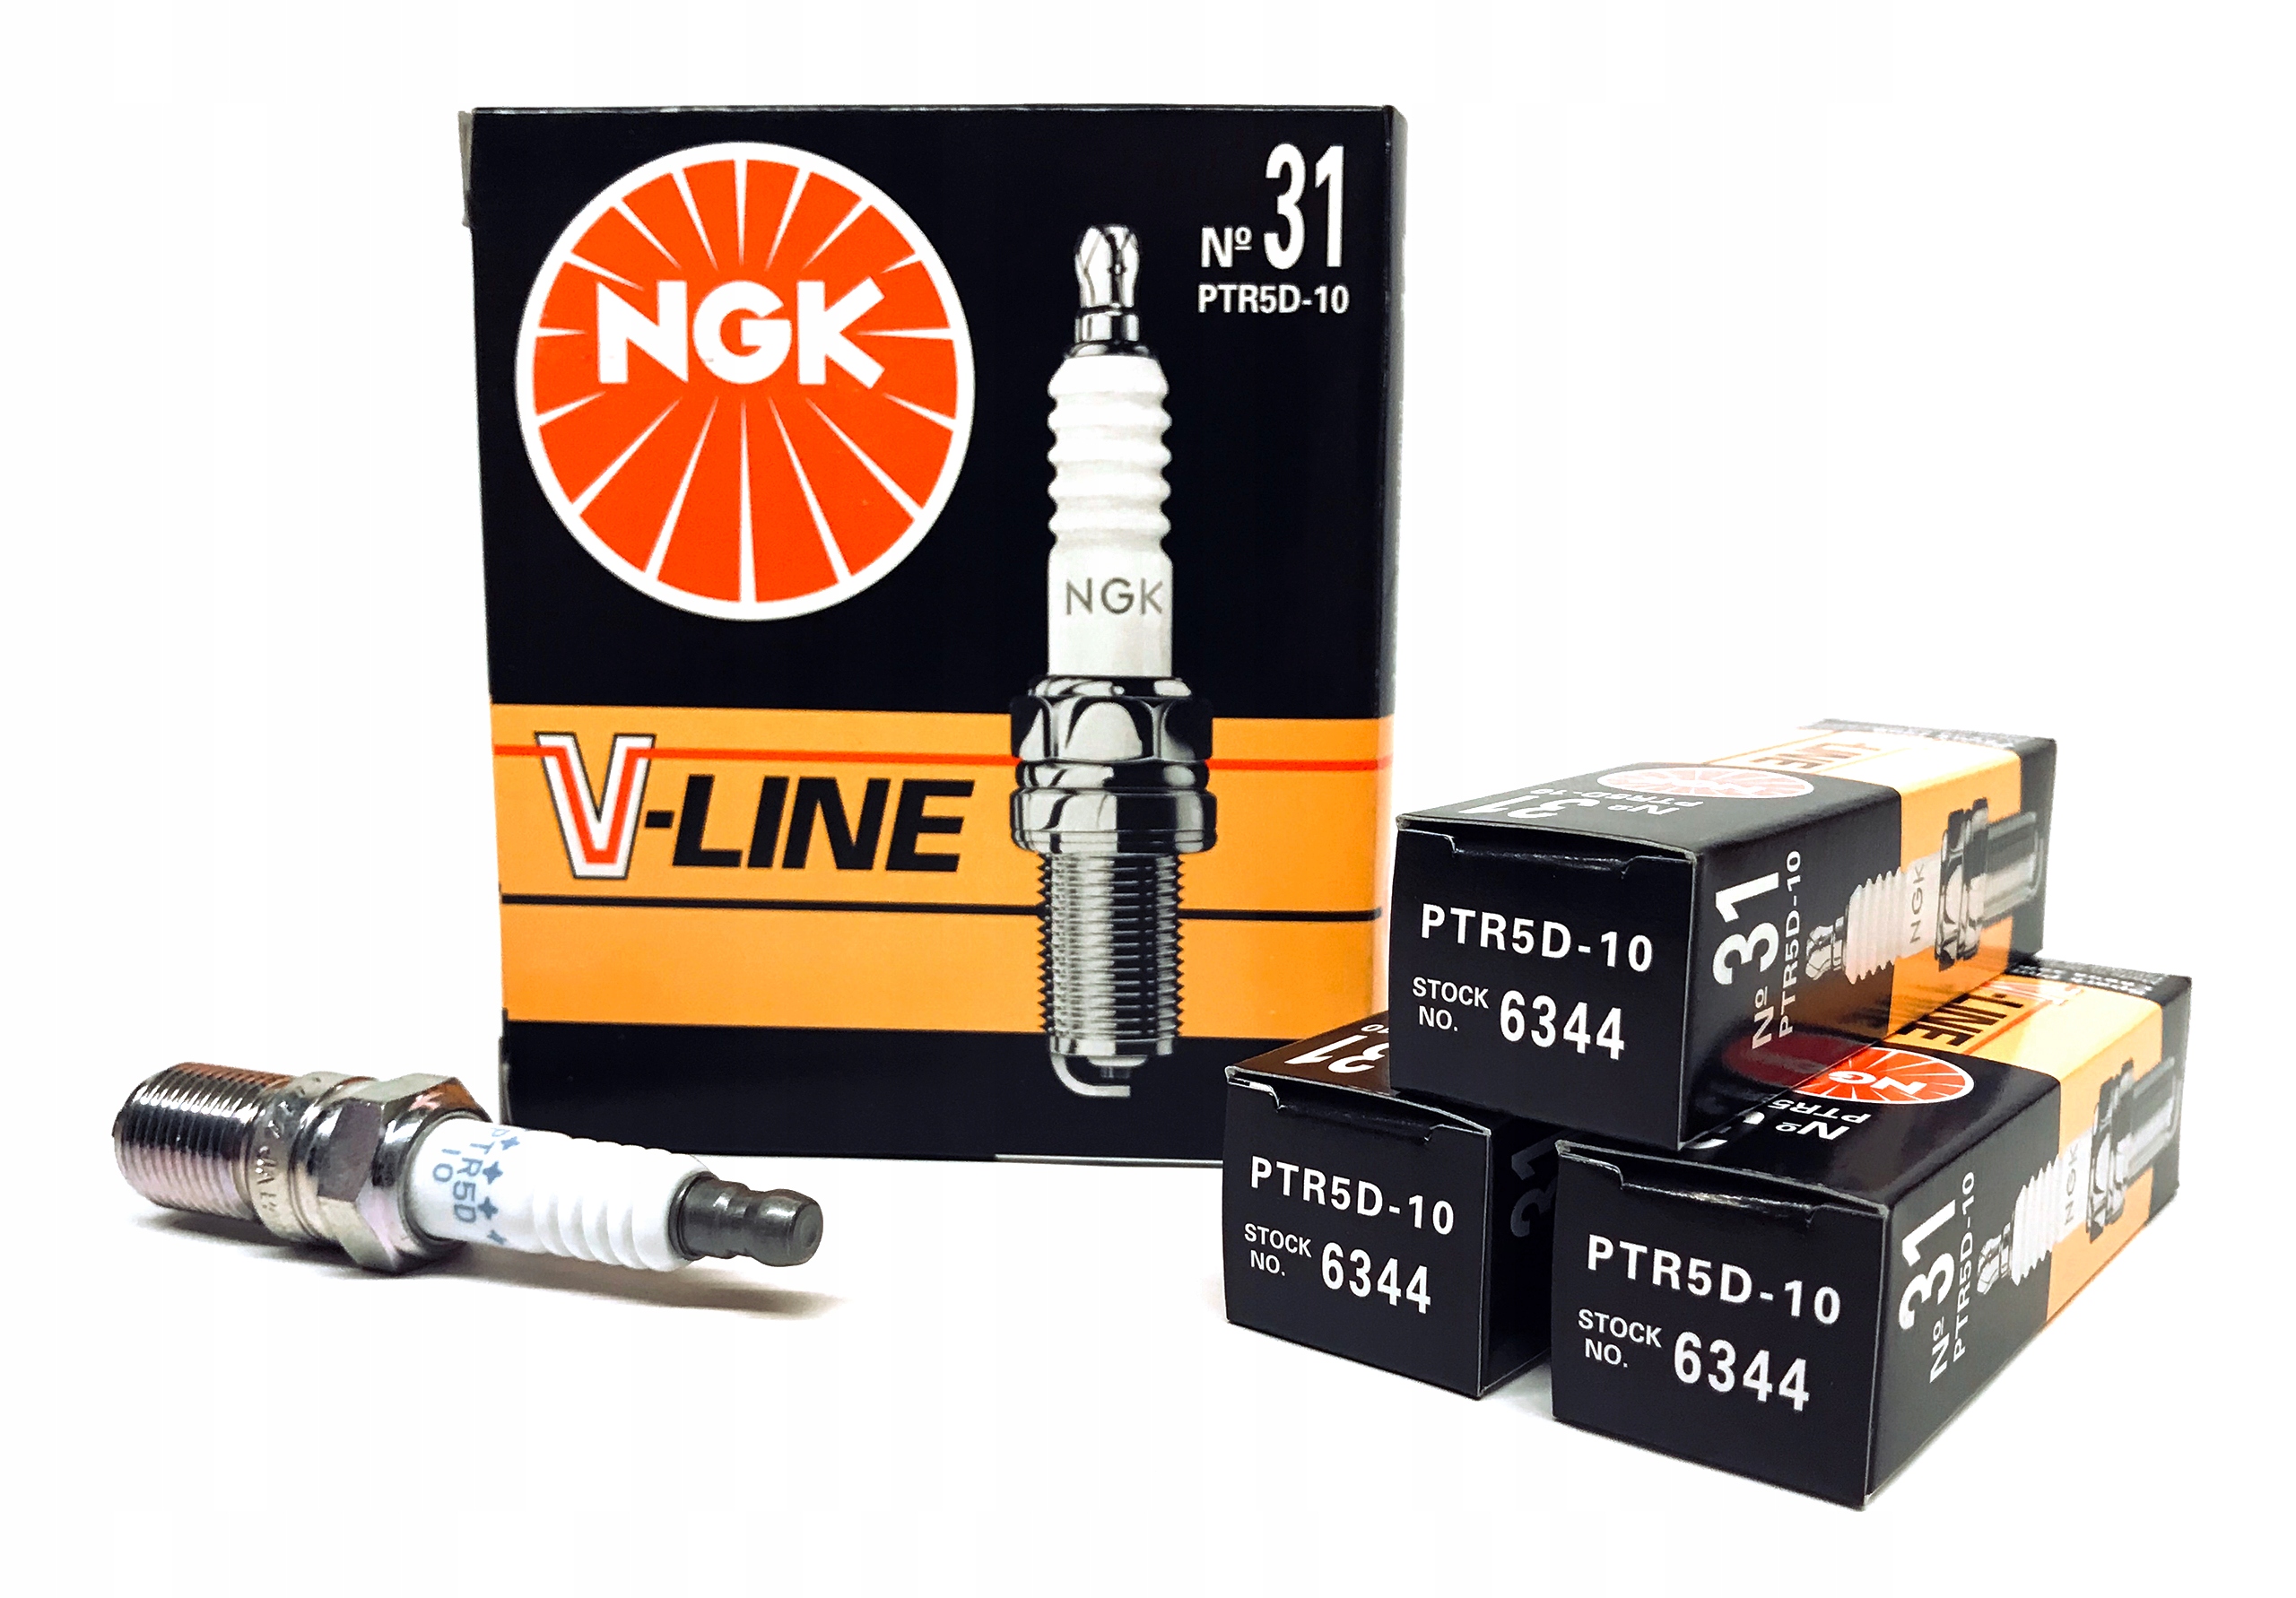 Свечи NGK L-V-Line-31